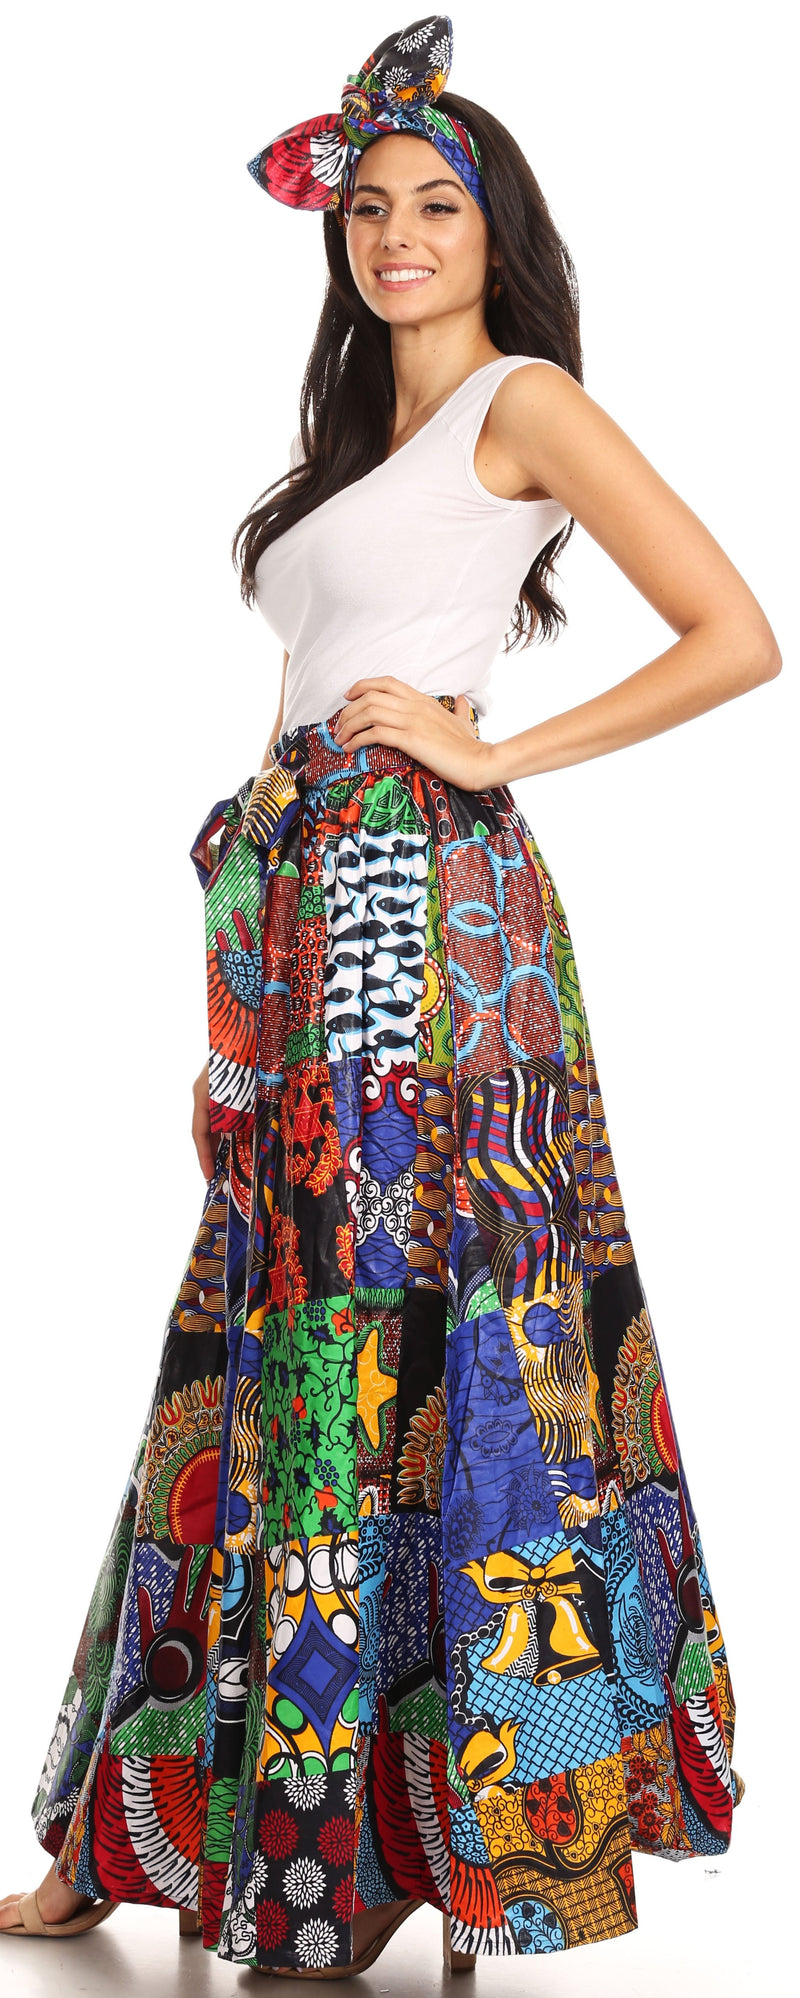 Sakkas Sora Women's Wide Leg Loose African Ankara Print Pants Casual Elastic Waist